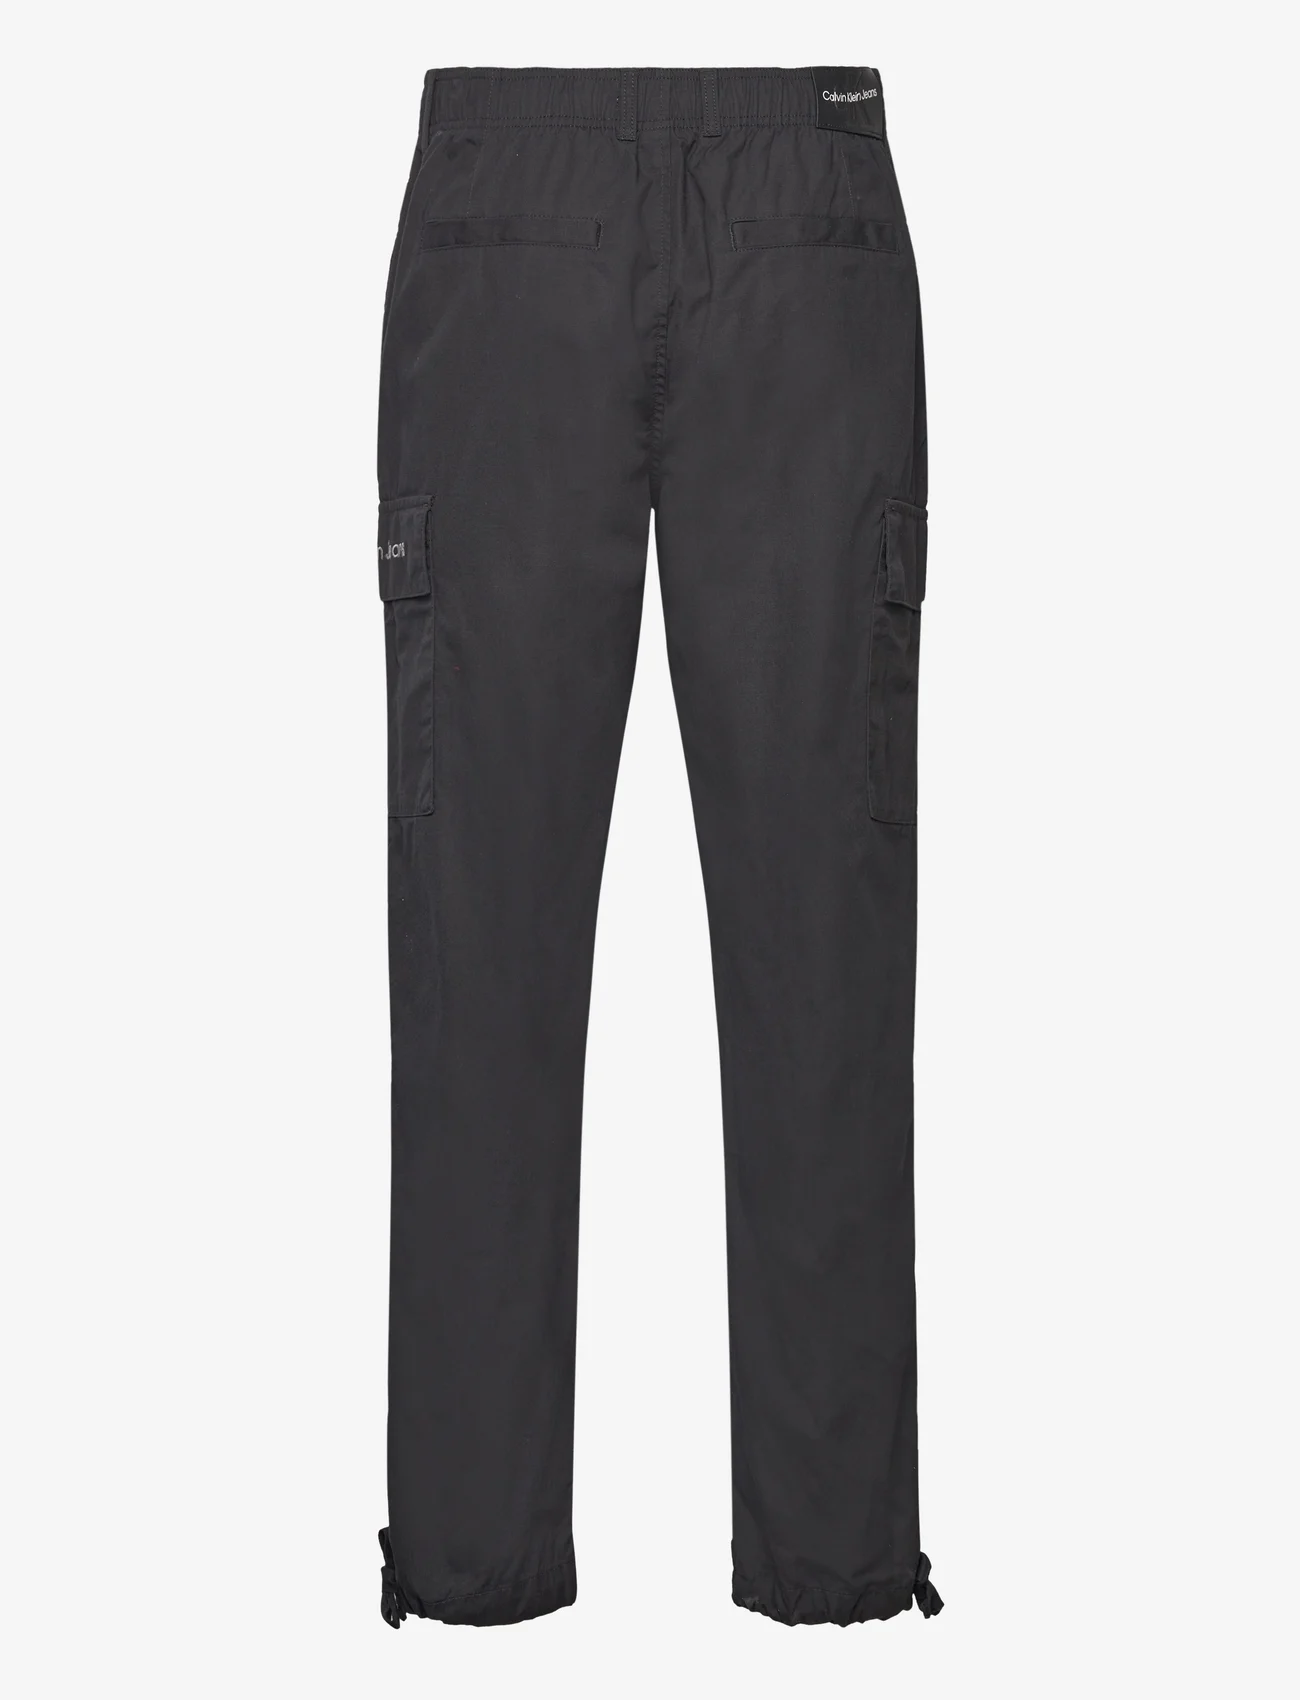 Calvin Klein Jeans - ESSENTIAL REGULAR CARGO PANT - cargo pants - ck black - 1